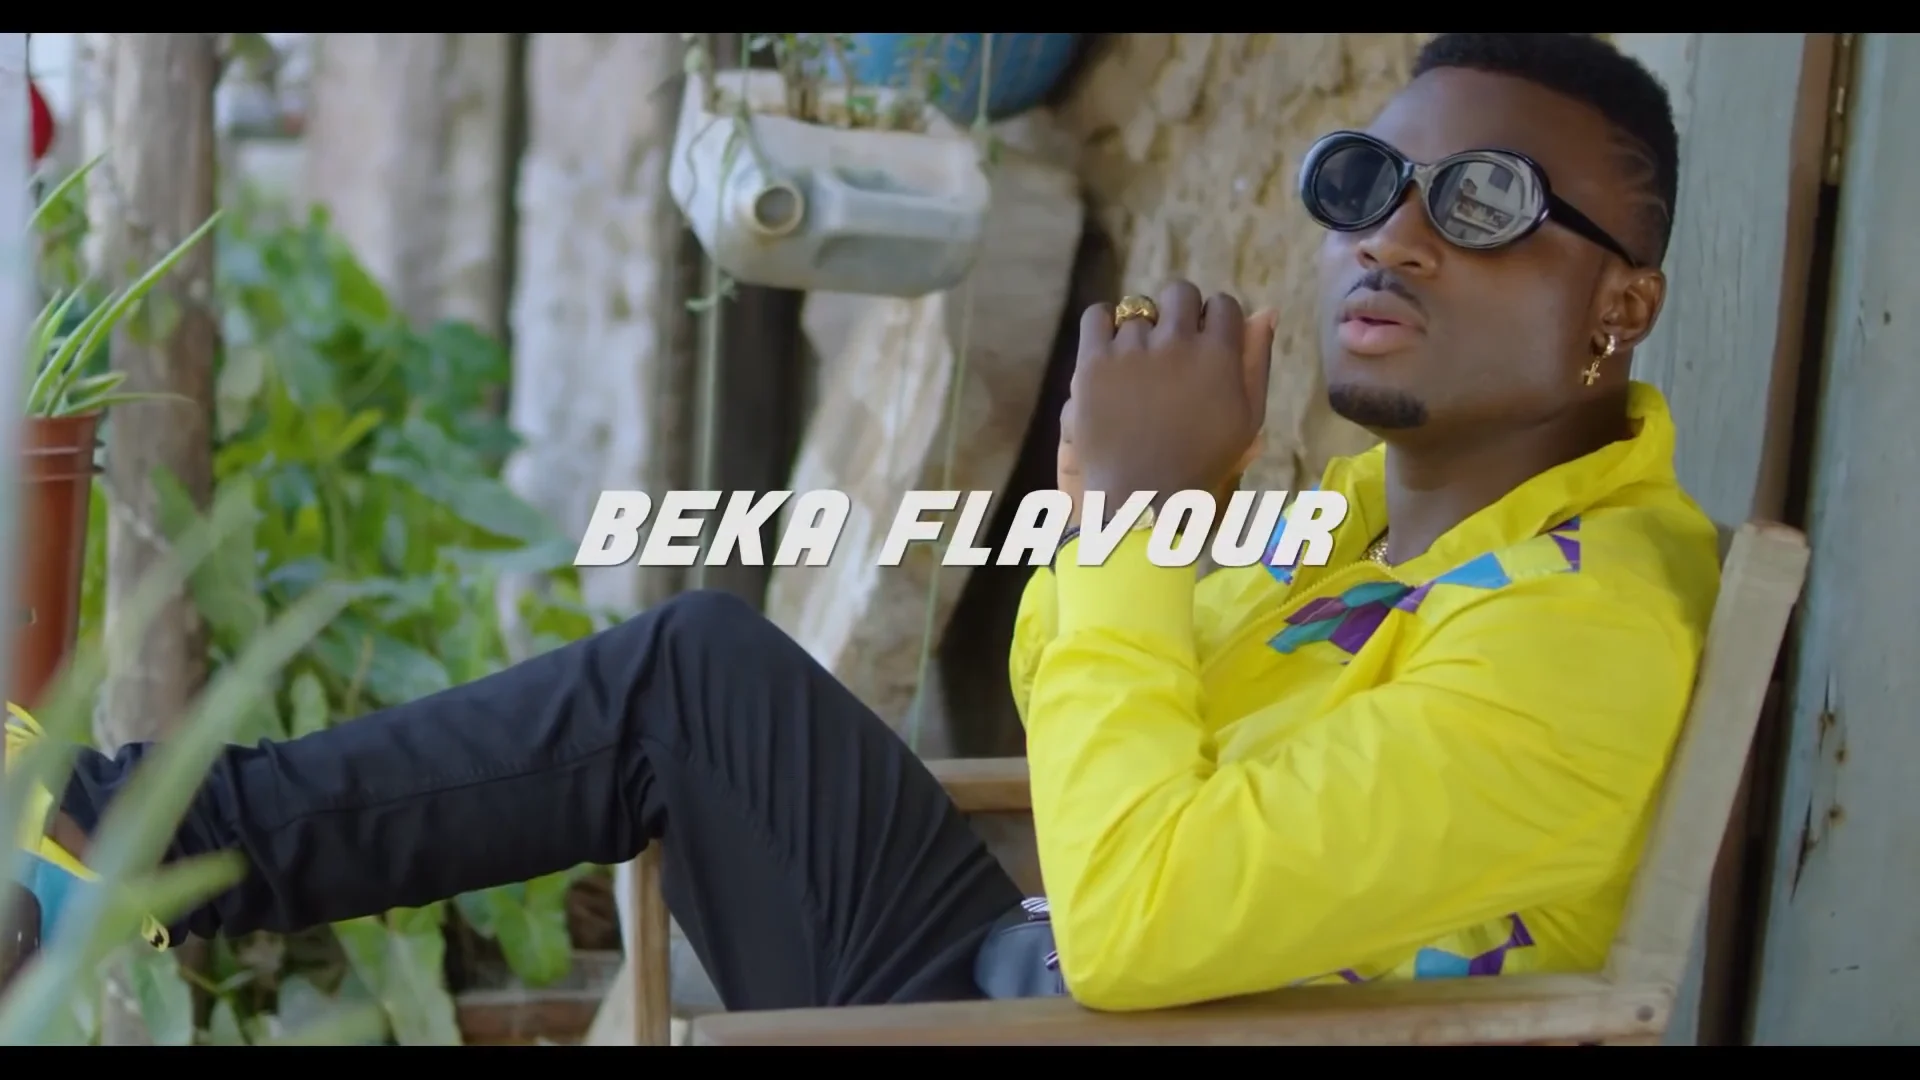 108 Beka Flavour - Finally (Deejay Ejay\'s EXT) on Vimeo